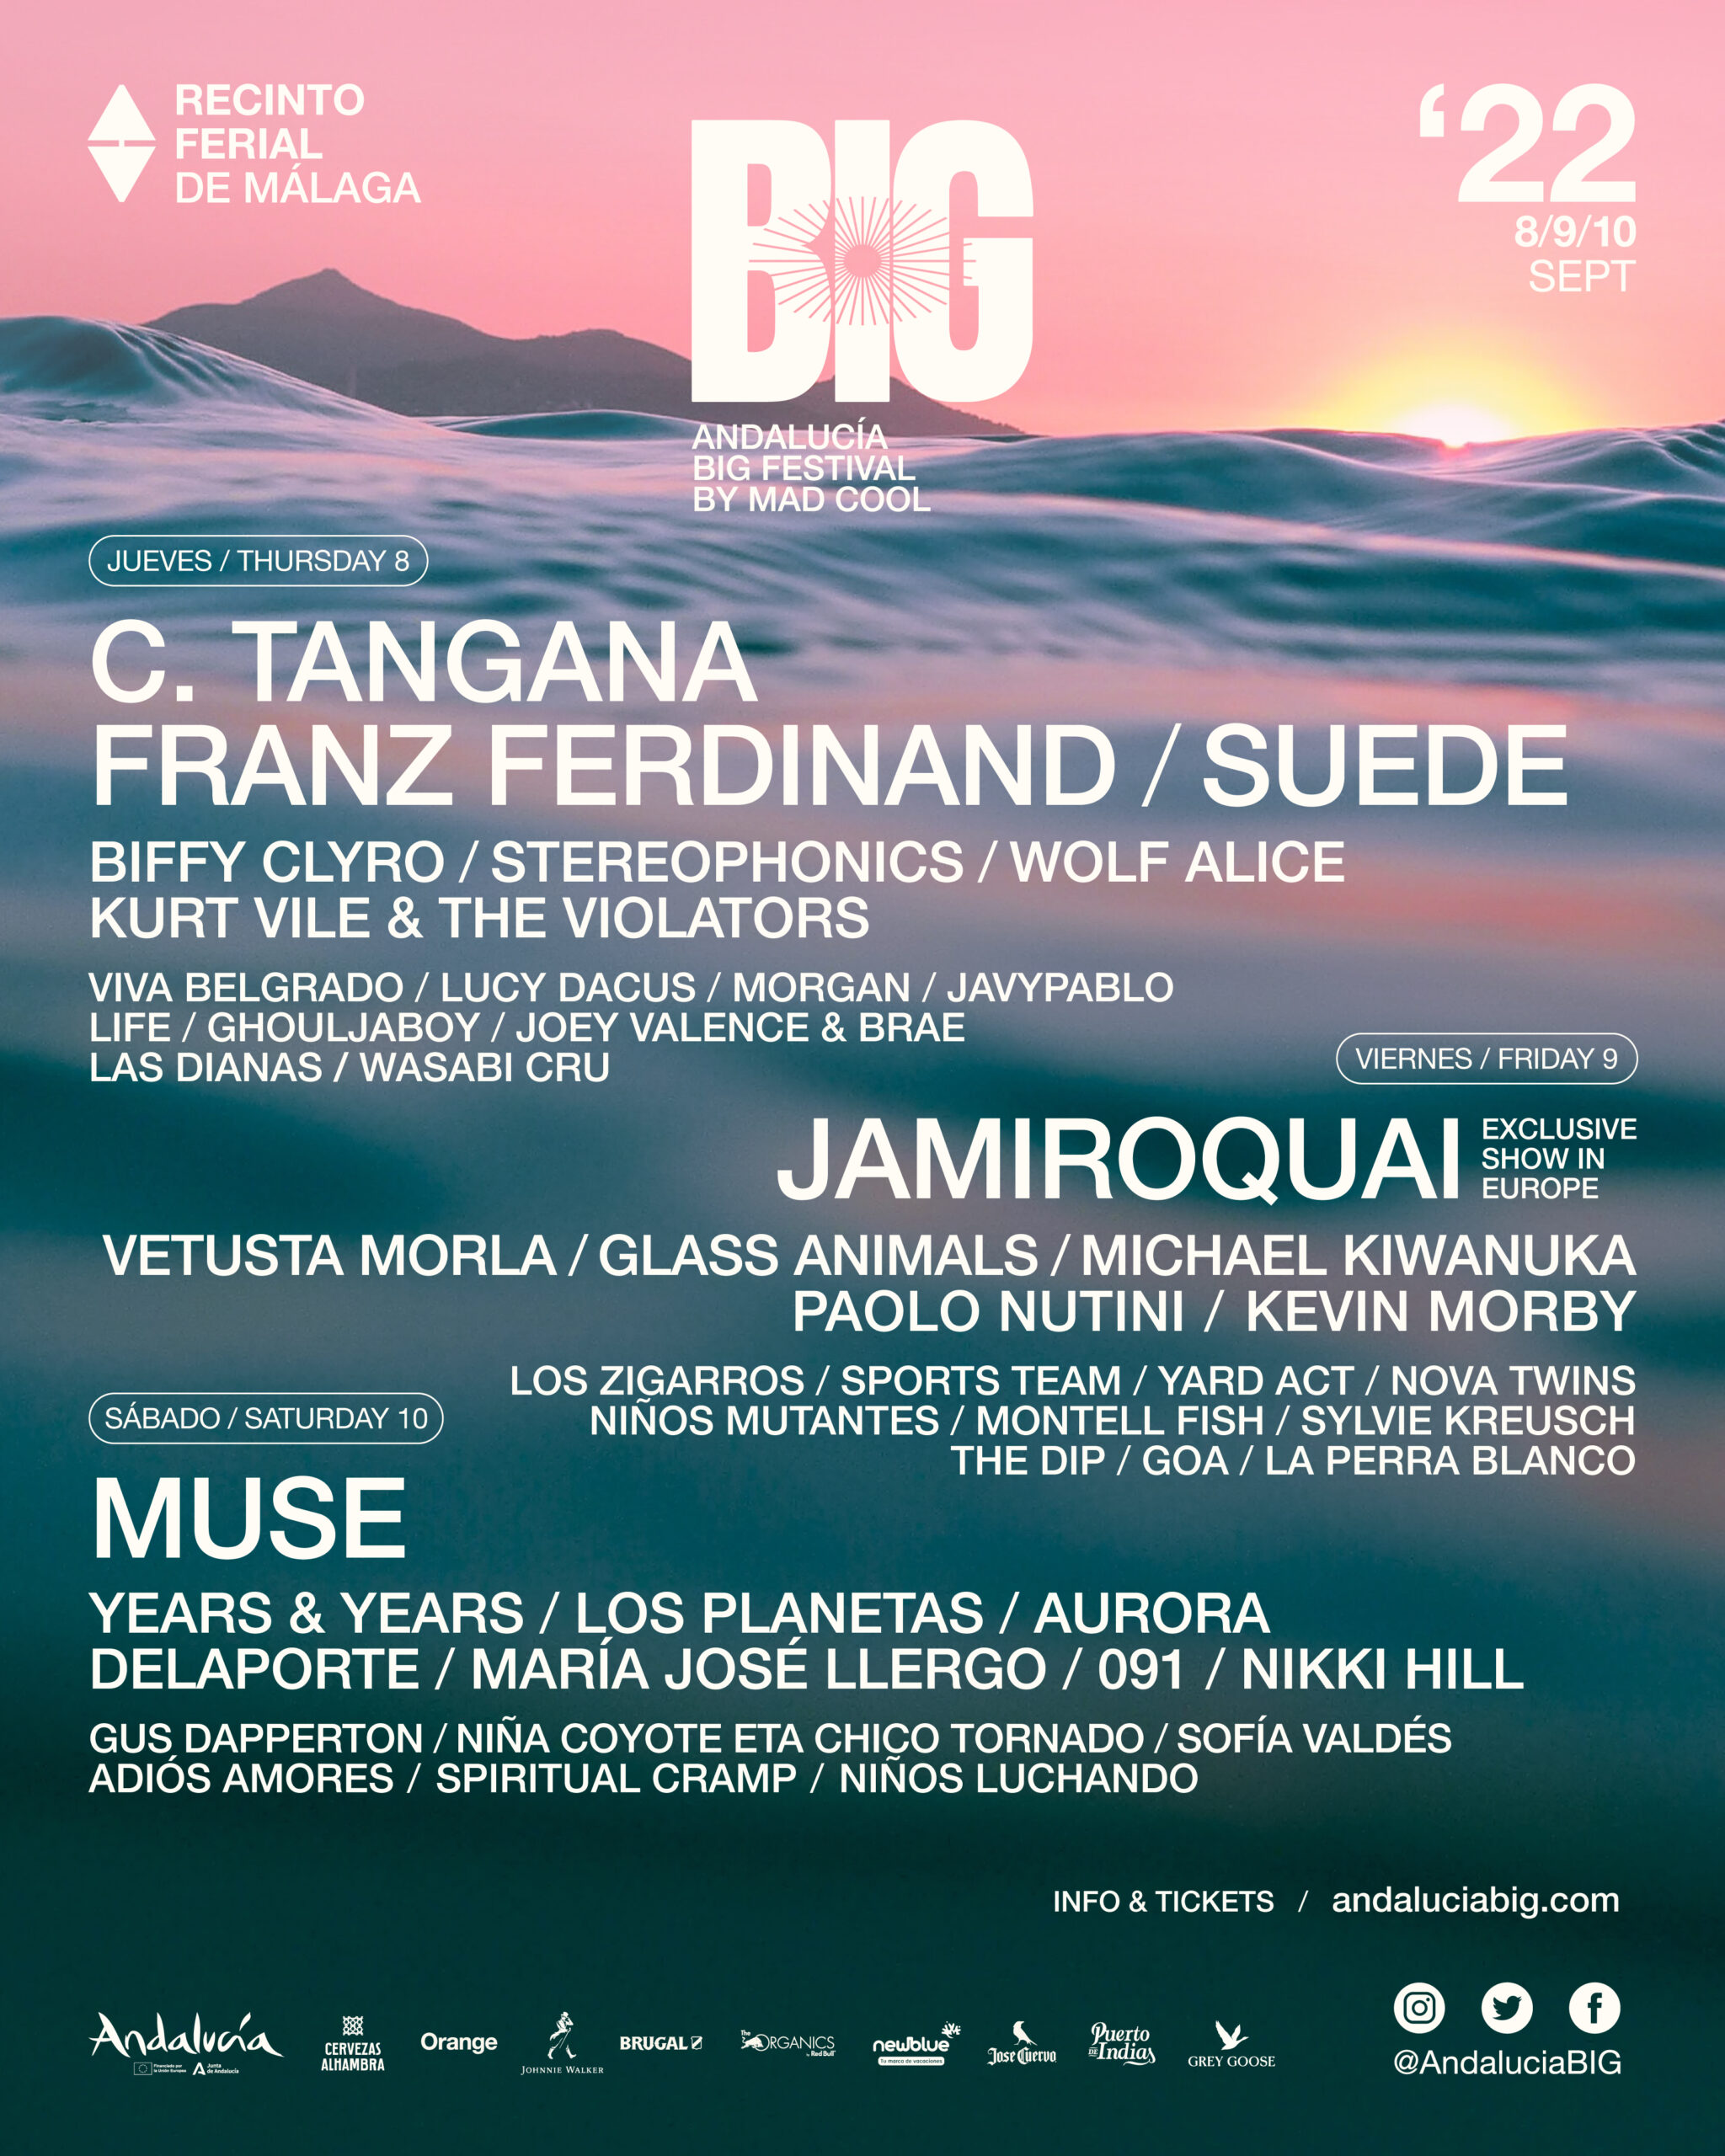 Cartel completo del Andalucía Big Festival 2022